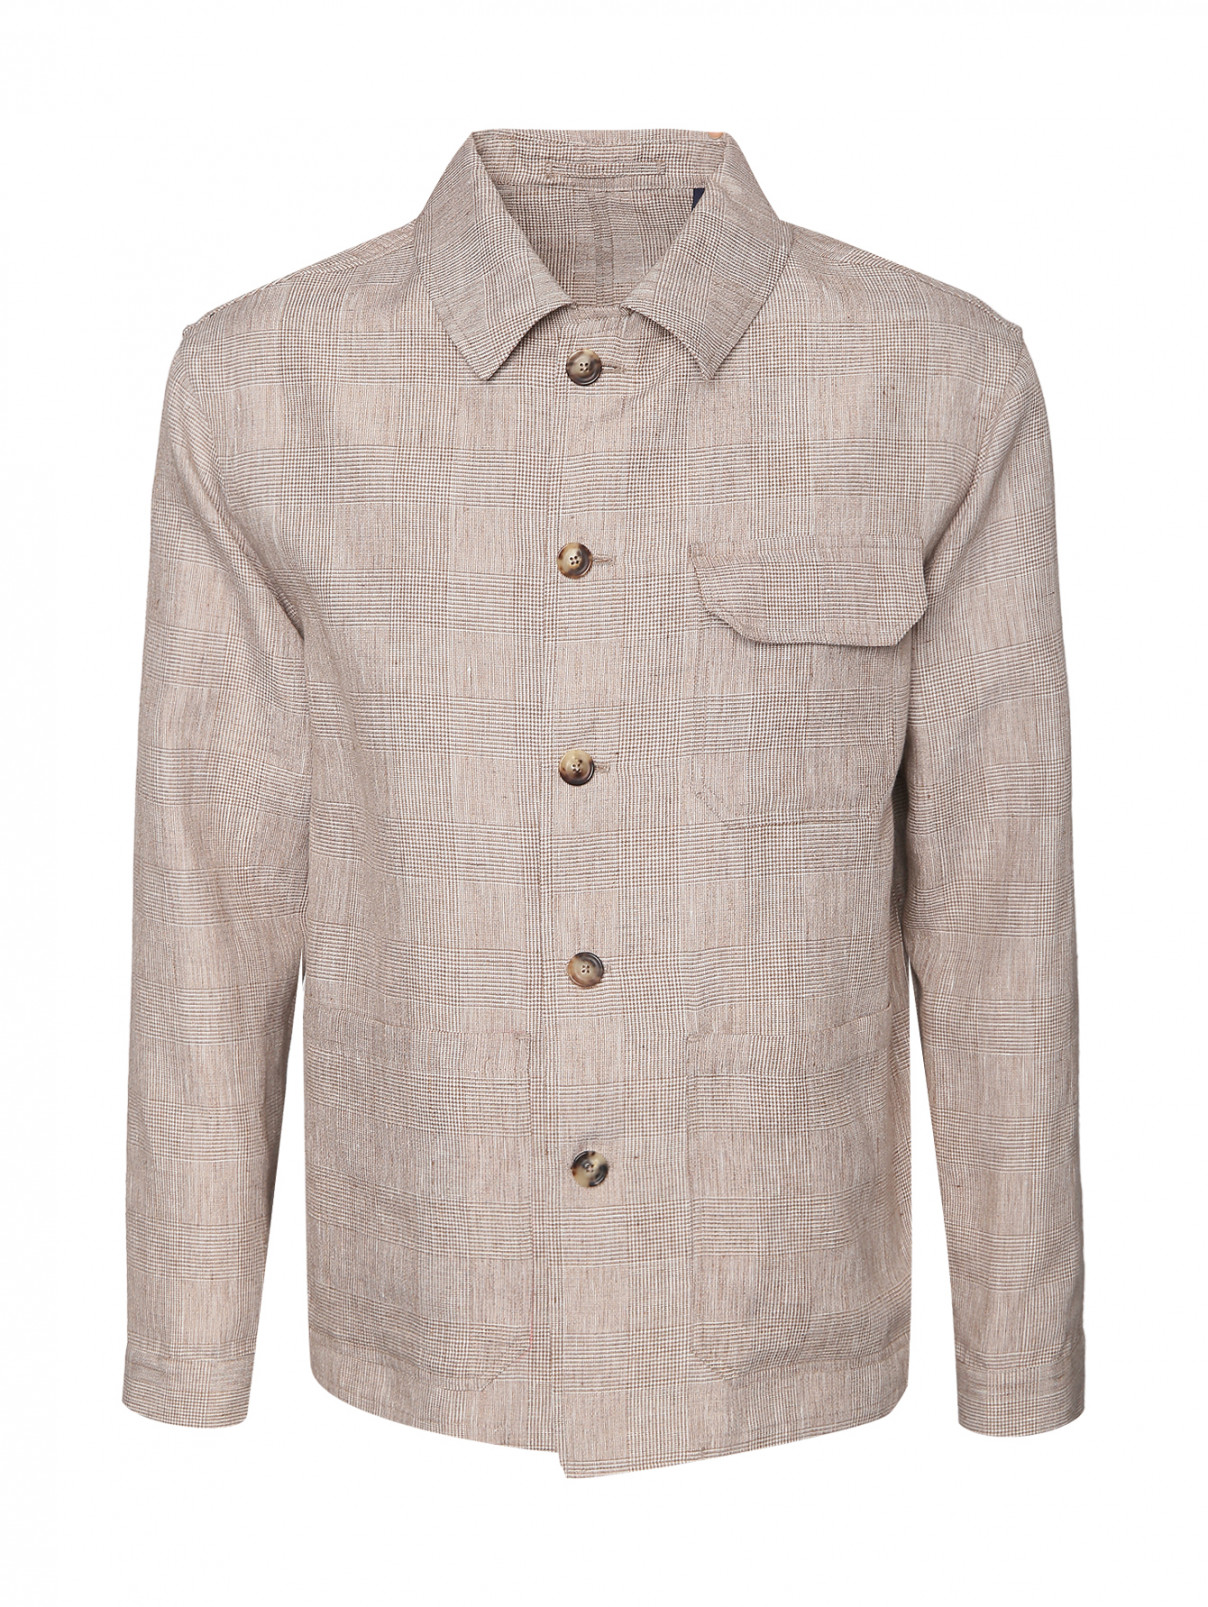 Куртка-рубашка из льна с узором LARDINI  –  Общий вид  – Цвет:  Бежевый